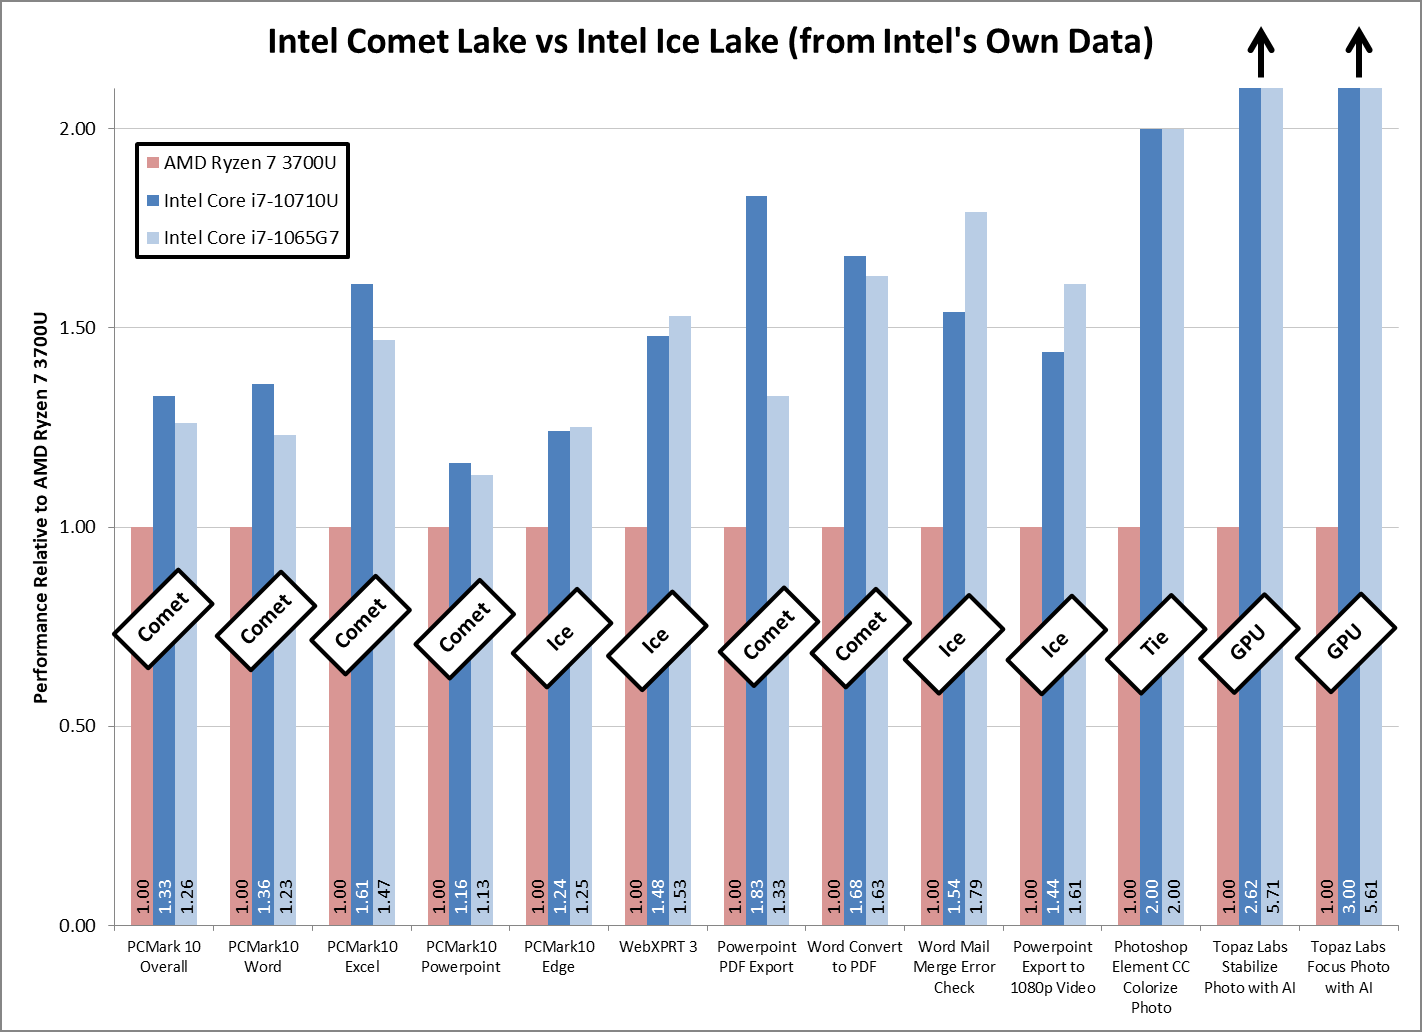  Core i7-10710U (Comet Lake) vs. Core i7-1065G7 (Ice Lake)